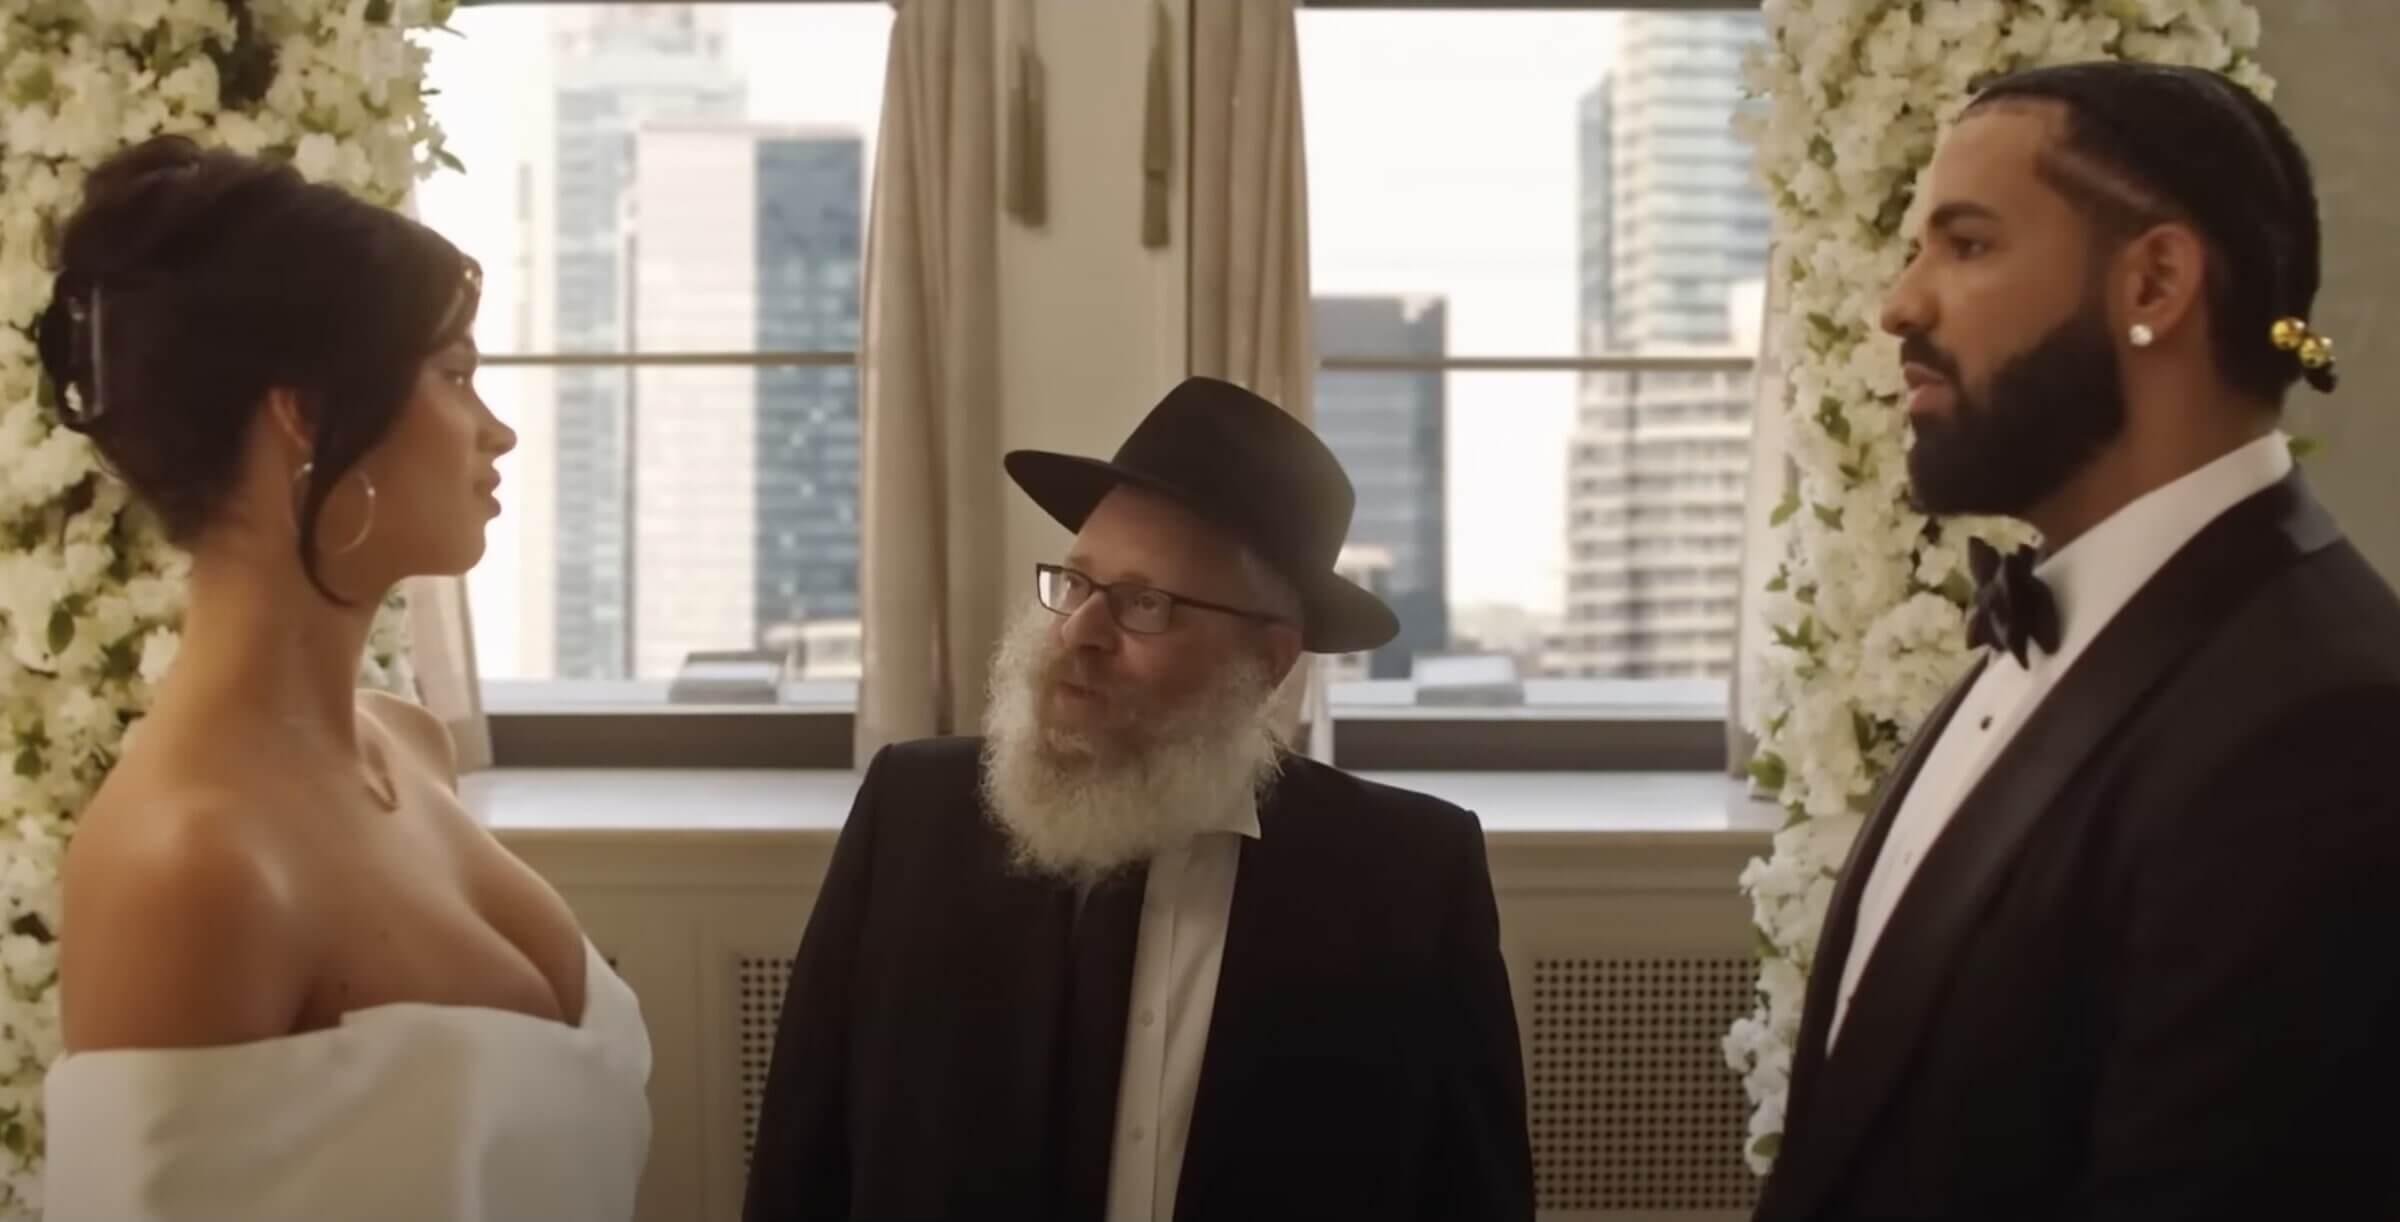 Ari Sitnik plays a rabbi in Drake's latest music video.